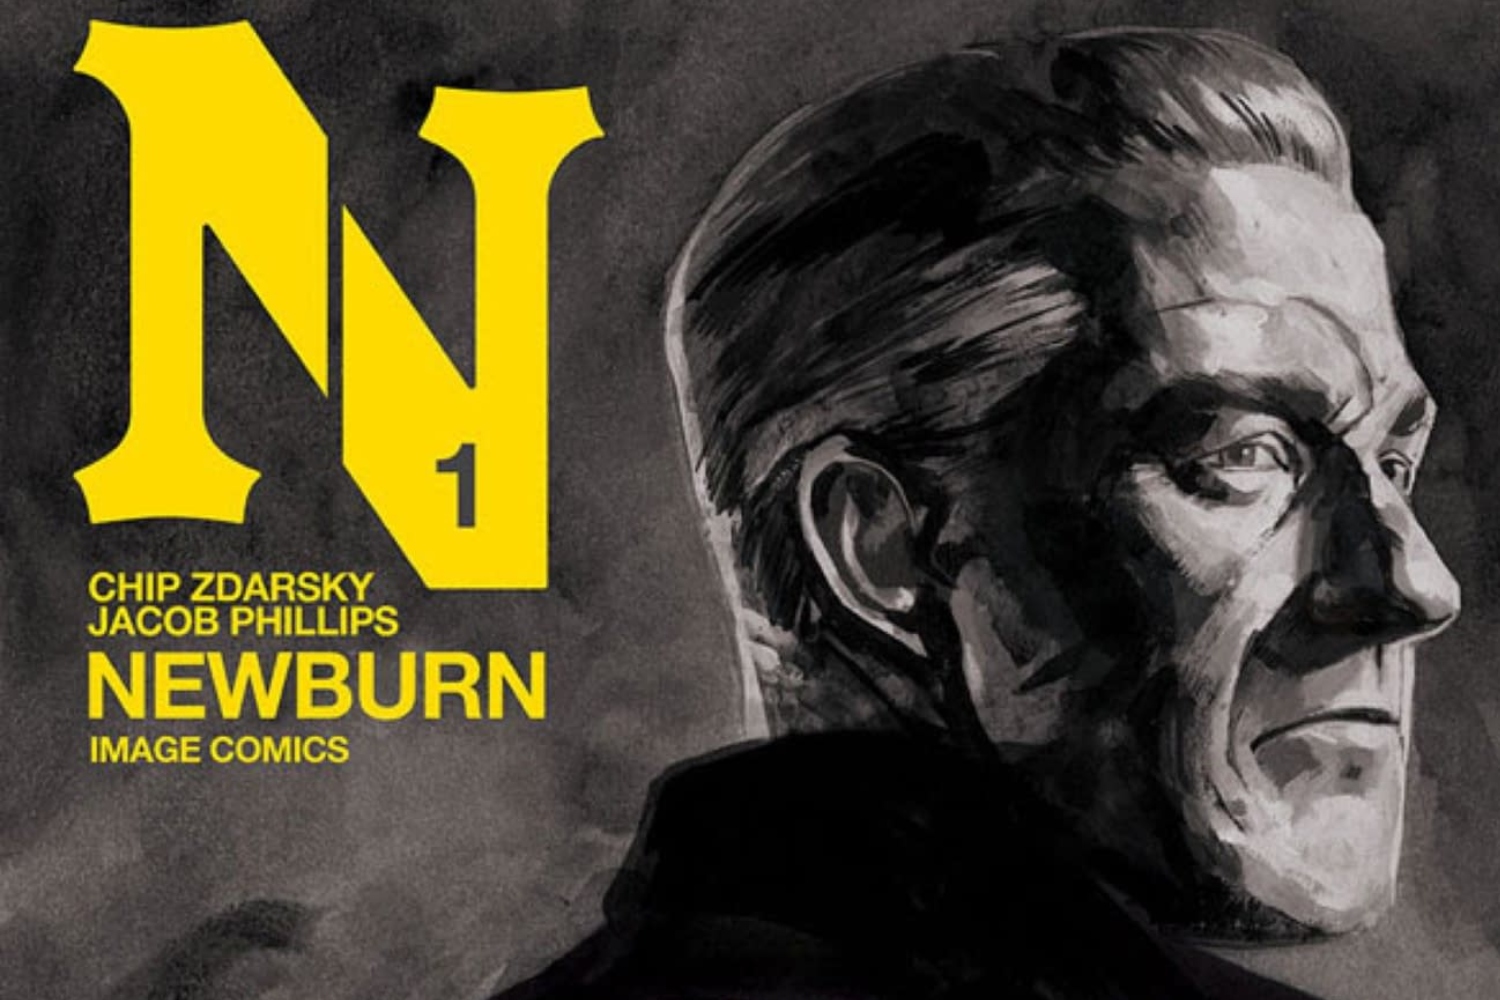 Chip Zdarsky sets his sights on sleek crime stories with 'Newburn'